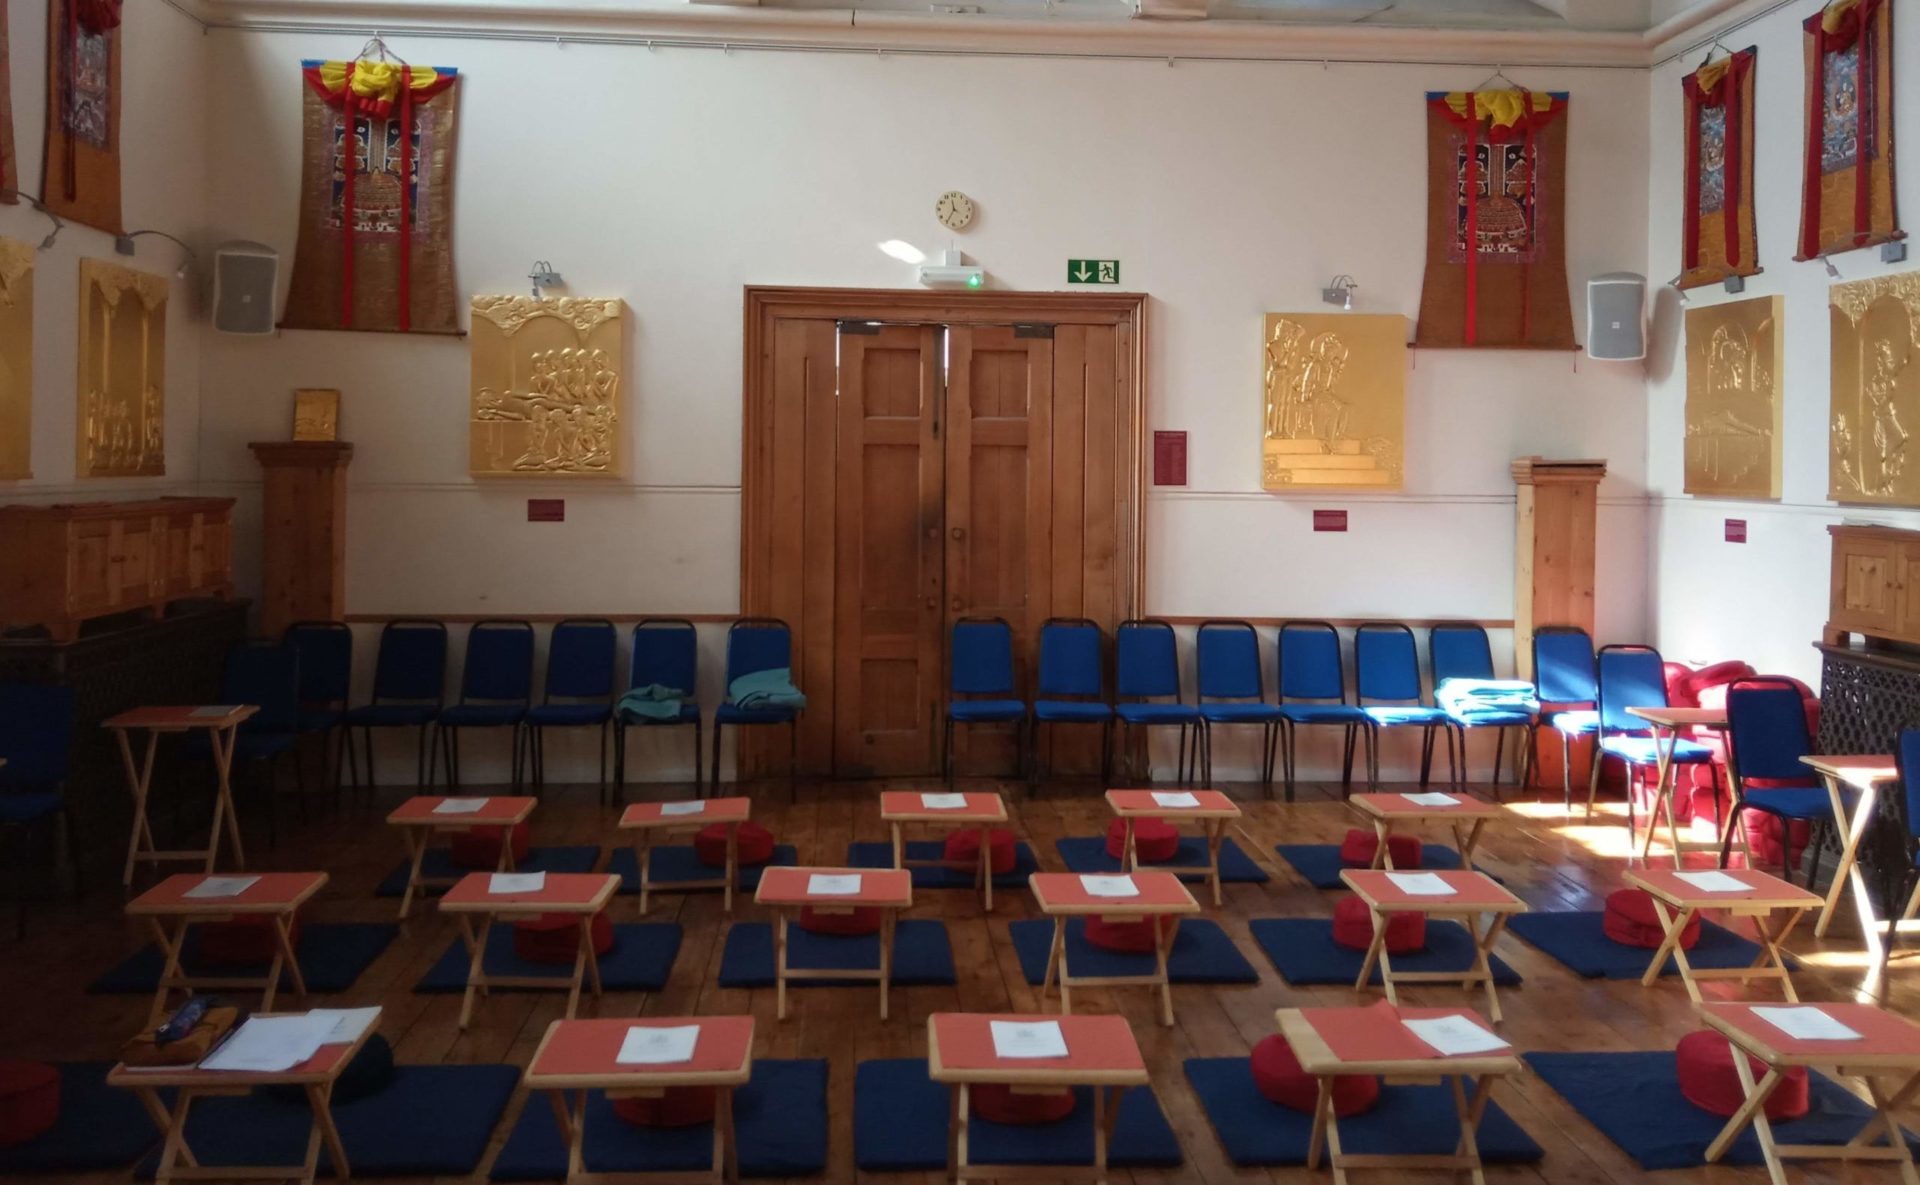 Venue Hire London Jamyang Buddhist Centre Courtroom - setup meeting